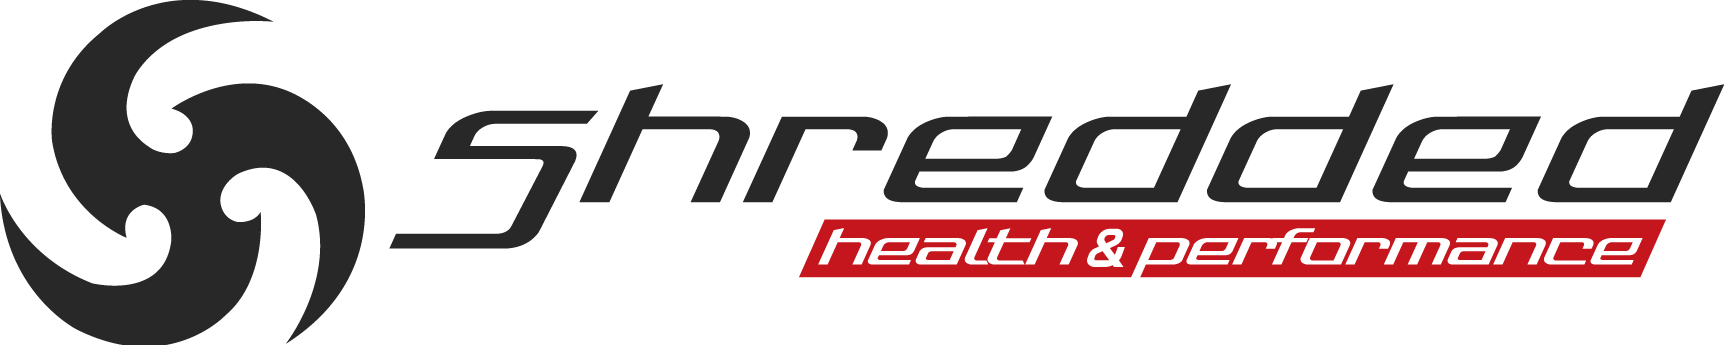 Shredded health & Performance logo